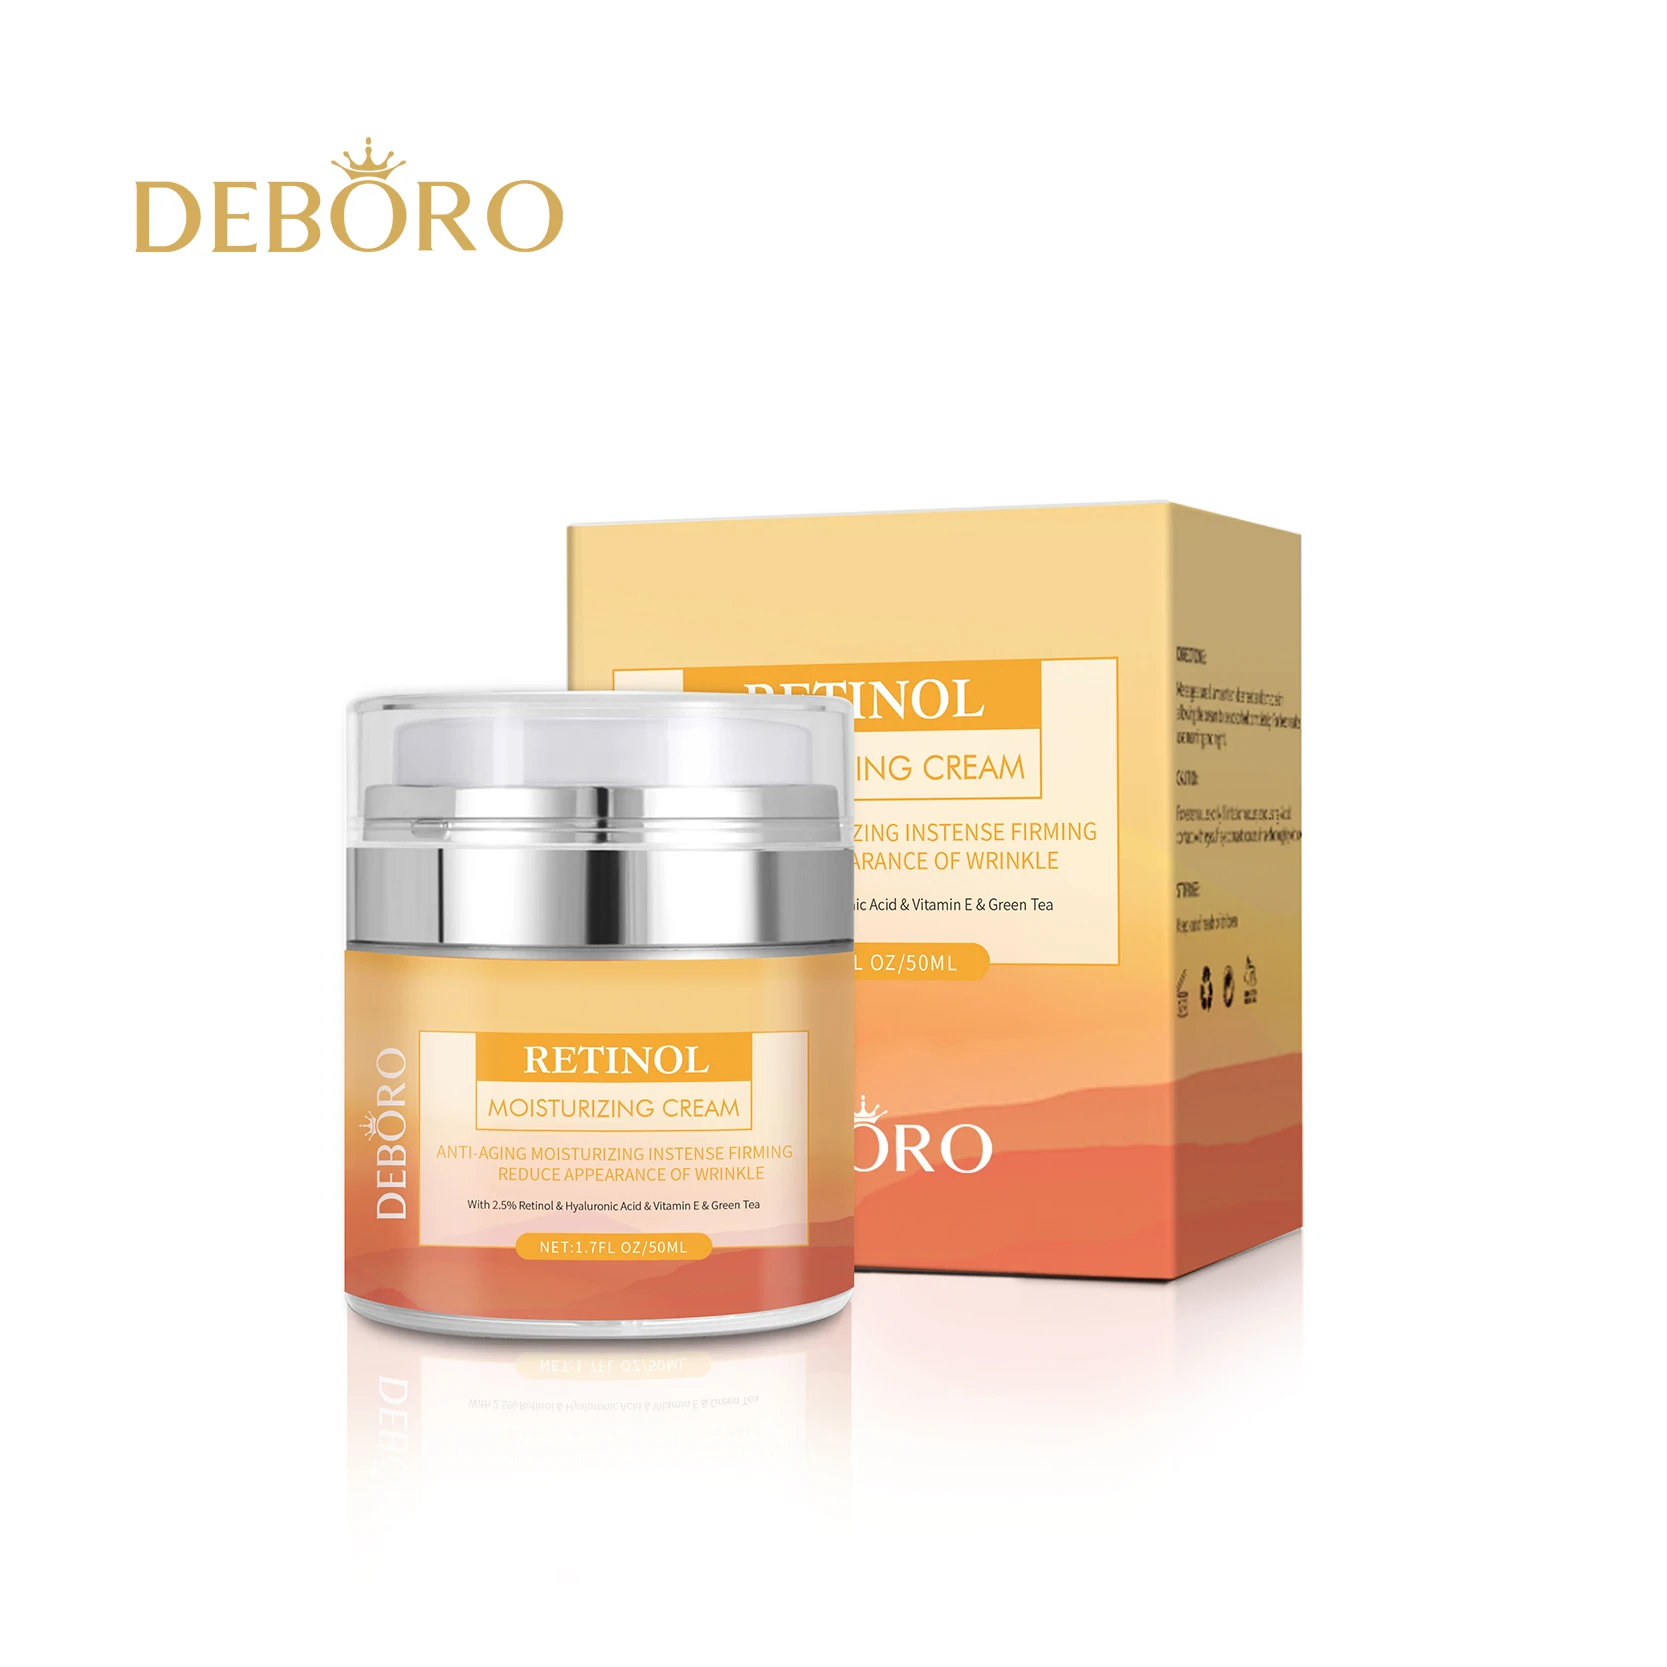 

Anti-Aging Moisturizer Cream 2.5% Anti-Wrinkle Essence with Hyaluronic Acid retinol facelift cream tube face